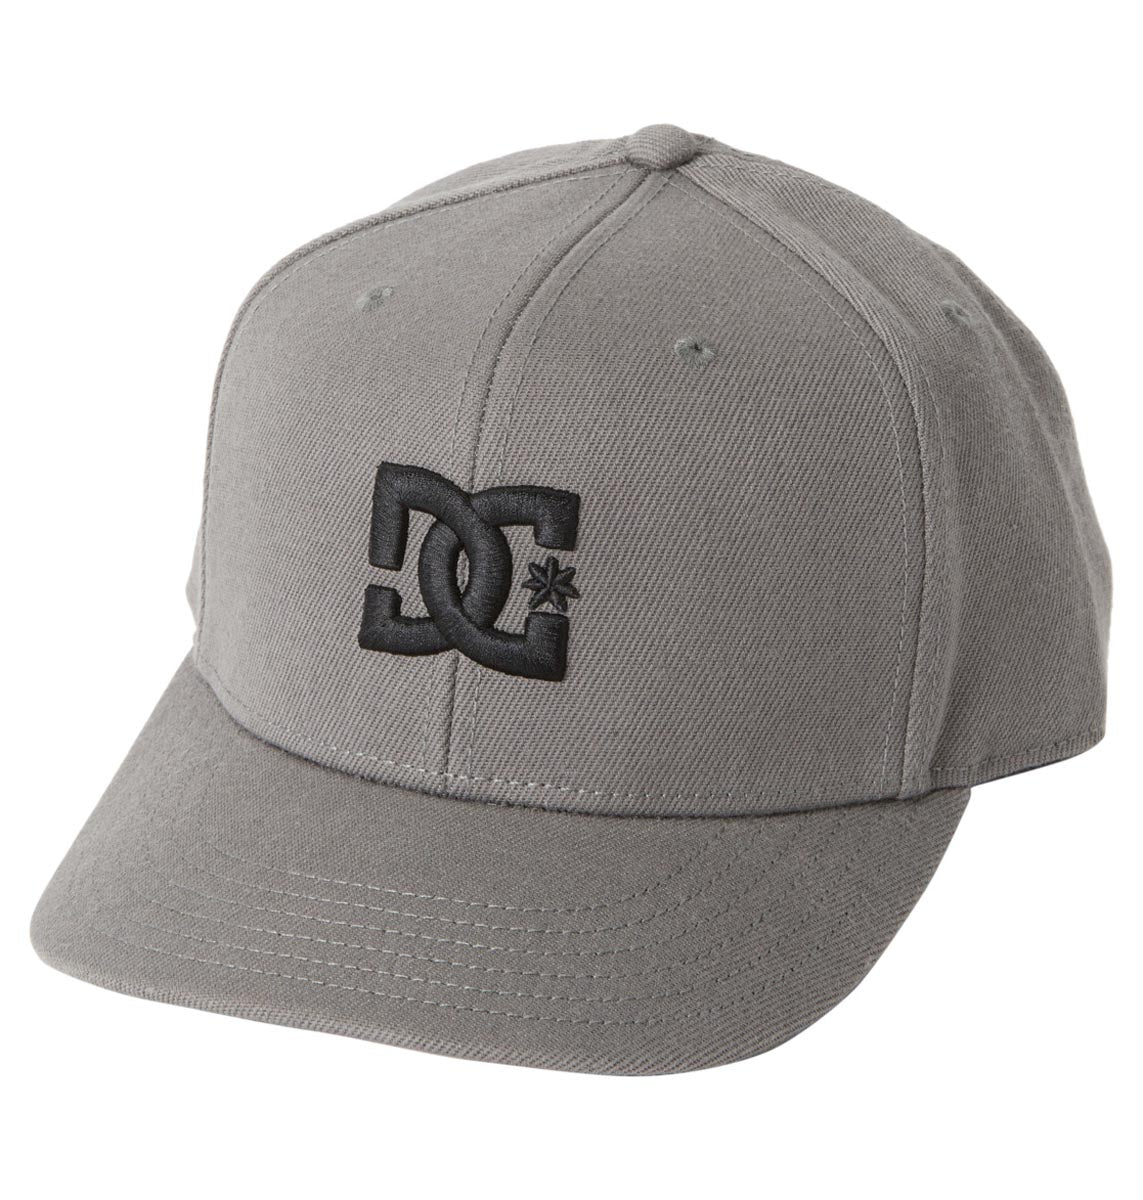 DC Empire Snapback Hat - Castlerock image 1